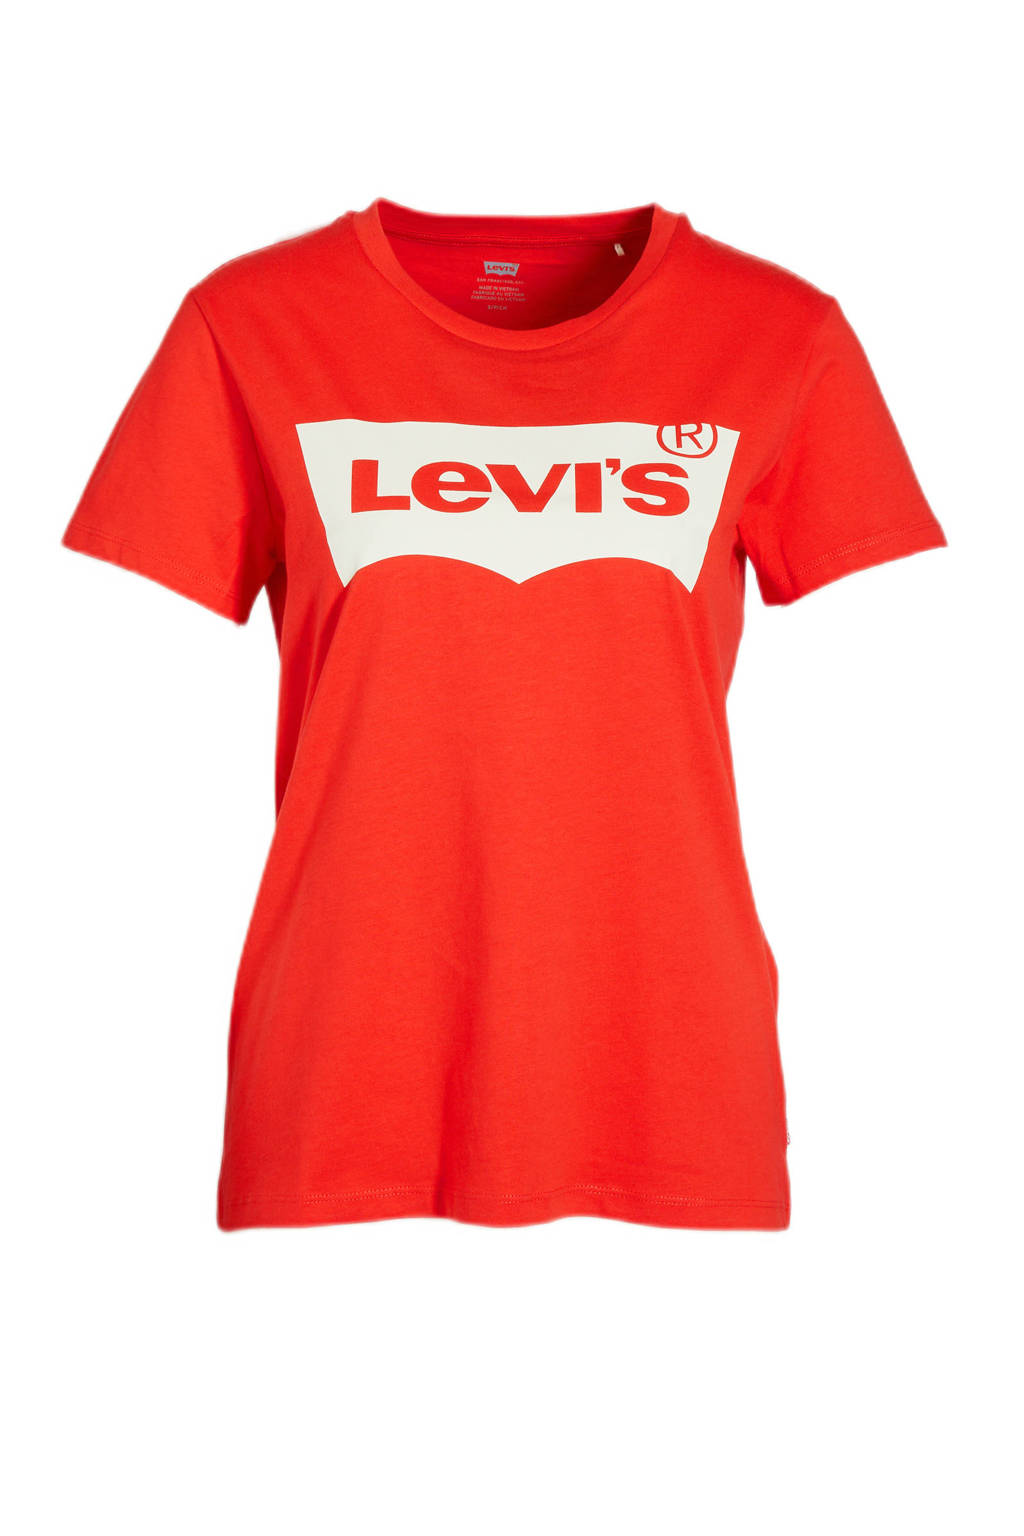 Levi's T-shirt met logo | wehkamp